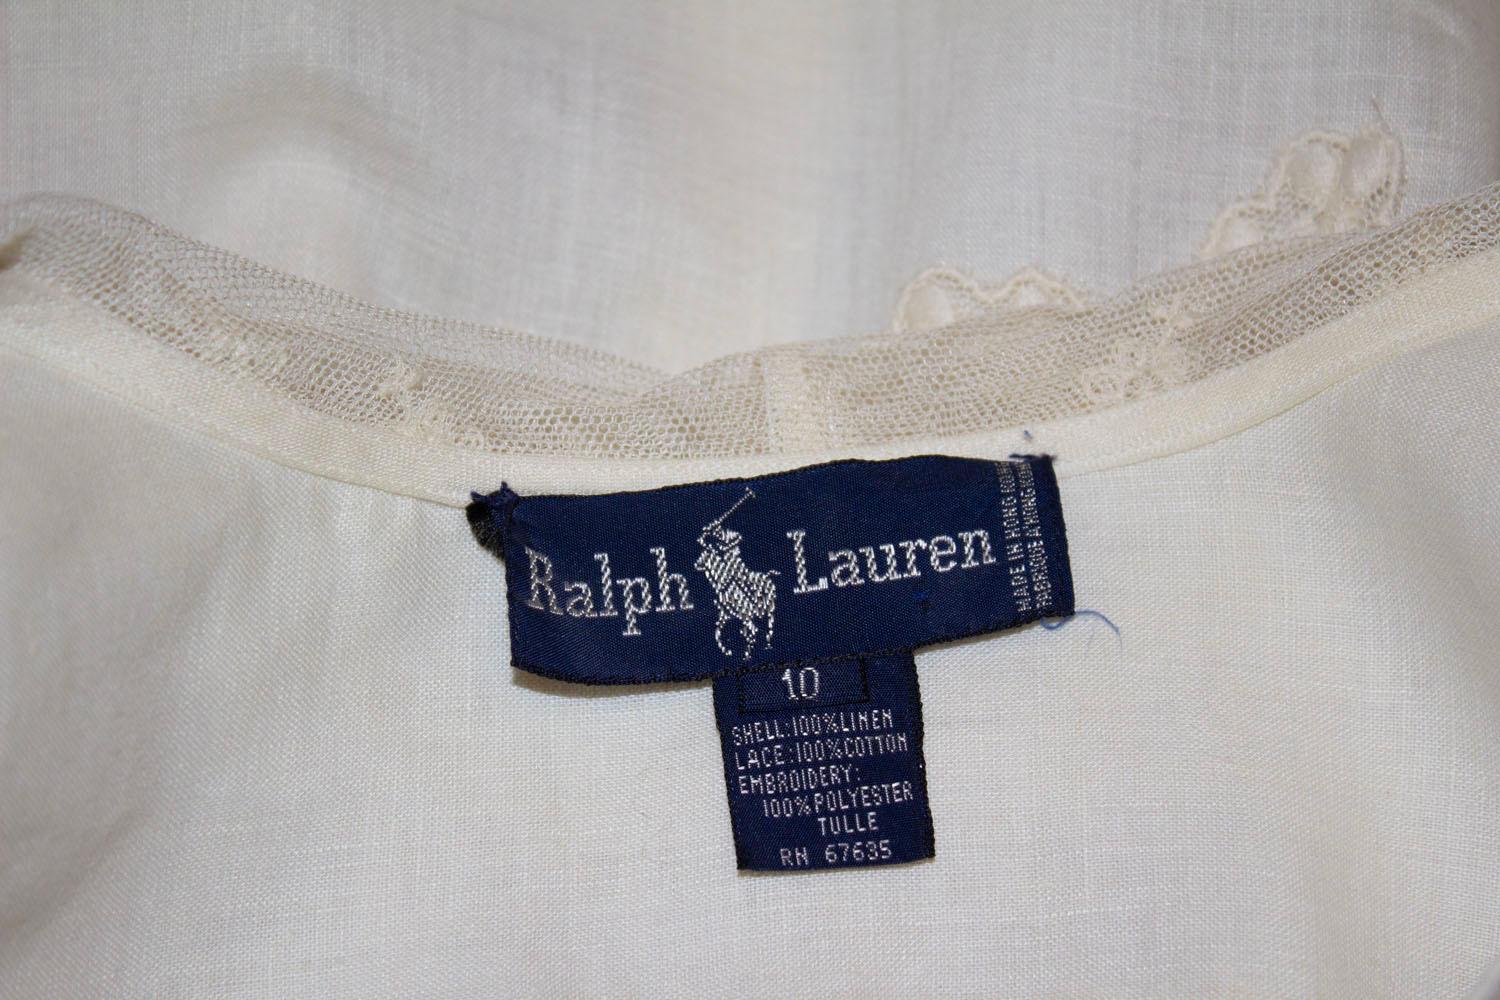 Vintage Linen and Lace Blouse by Ralph Lauren For Sale 1